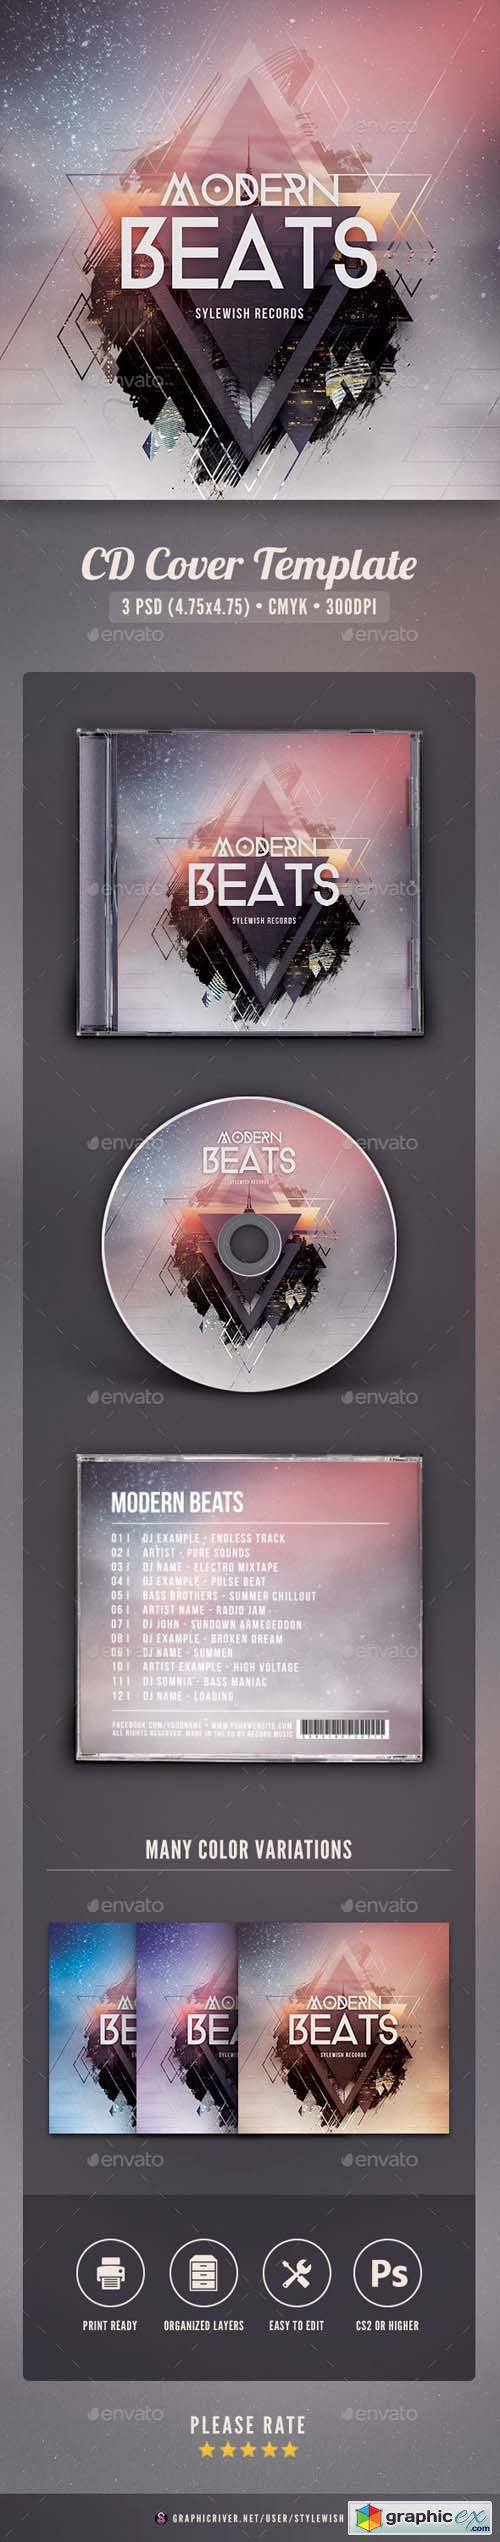 Modern Beats CD Cover Artwork 16142099